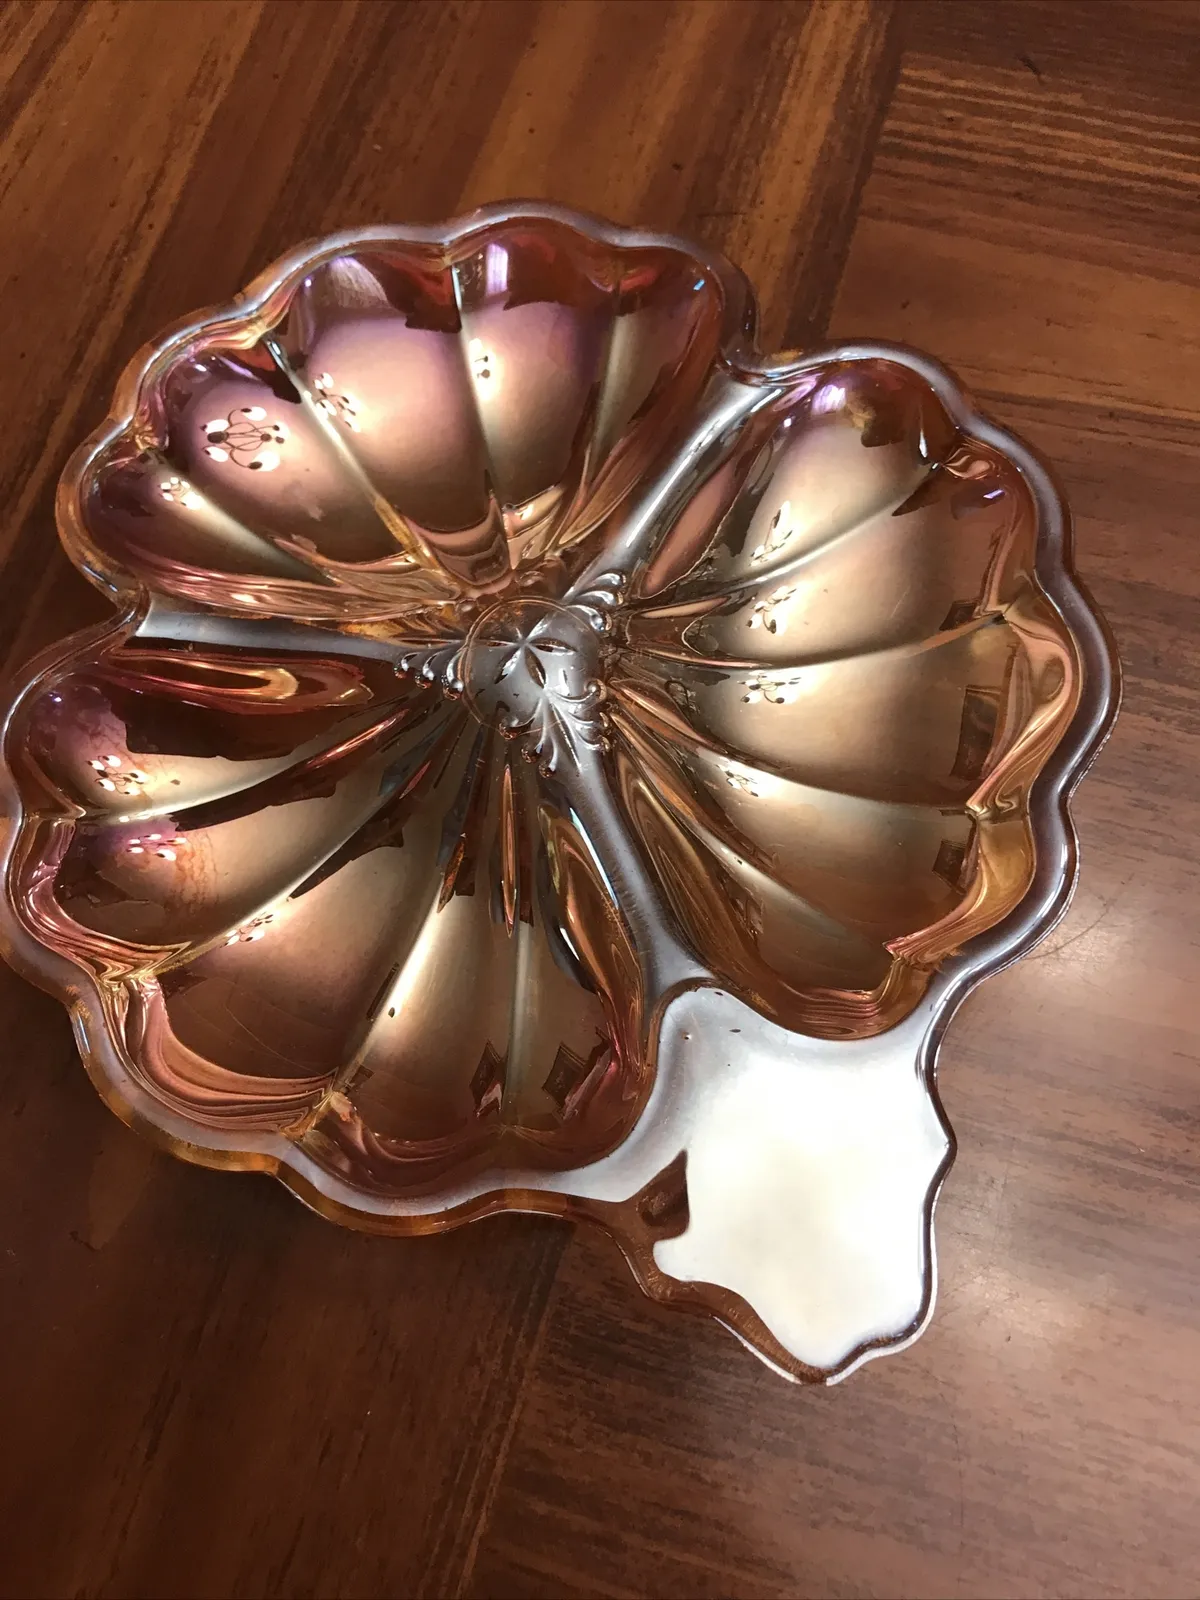 Peach Lusterware 3 Leaf Clover Dish Ashtray - $25.00